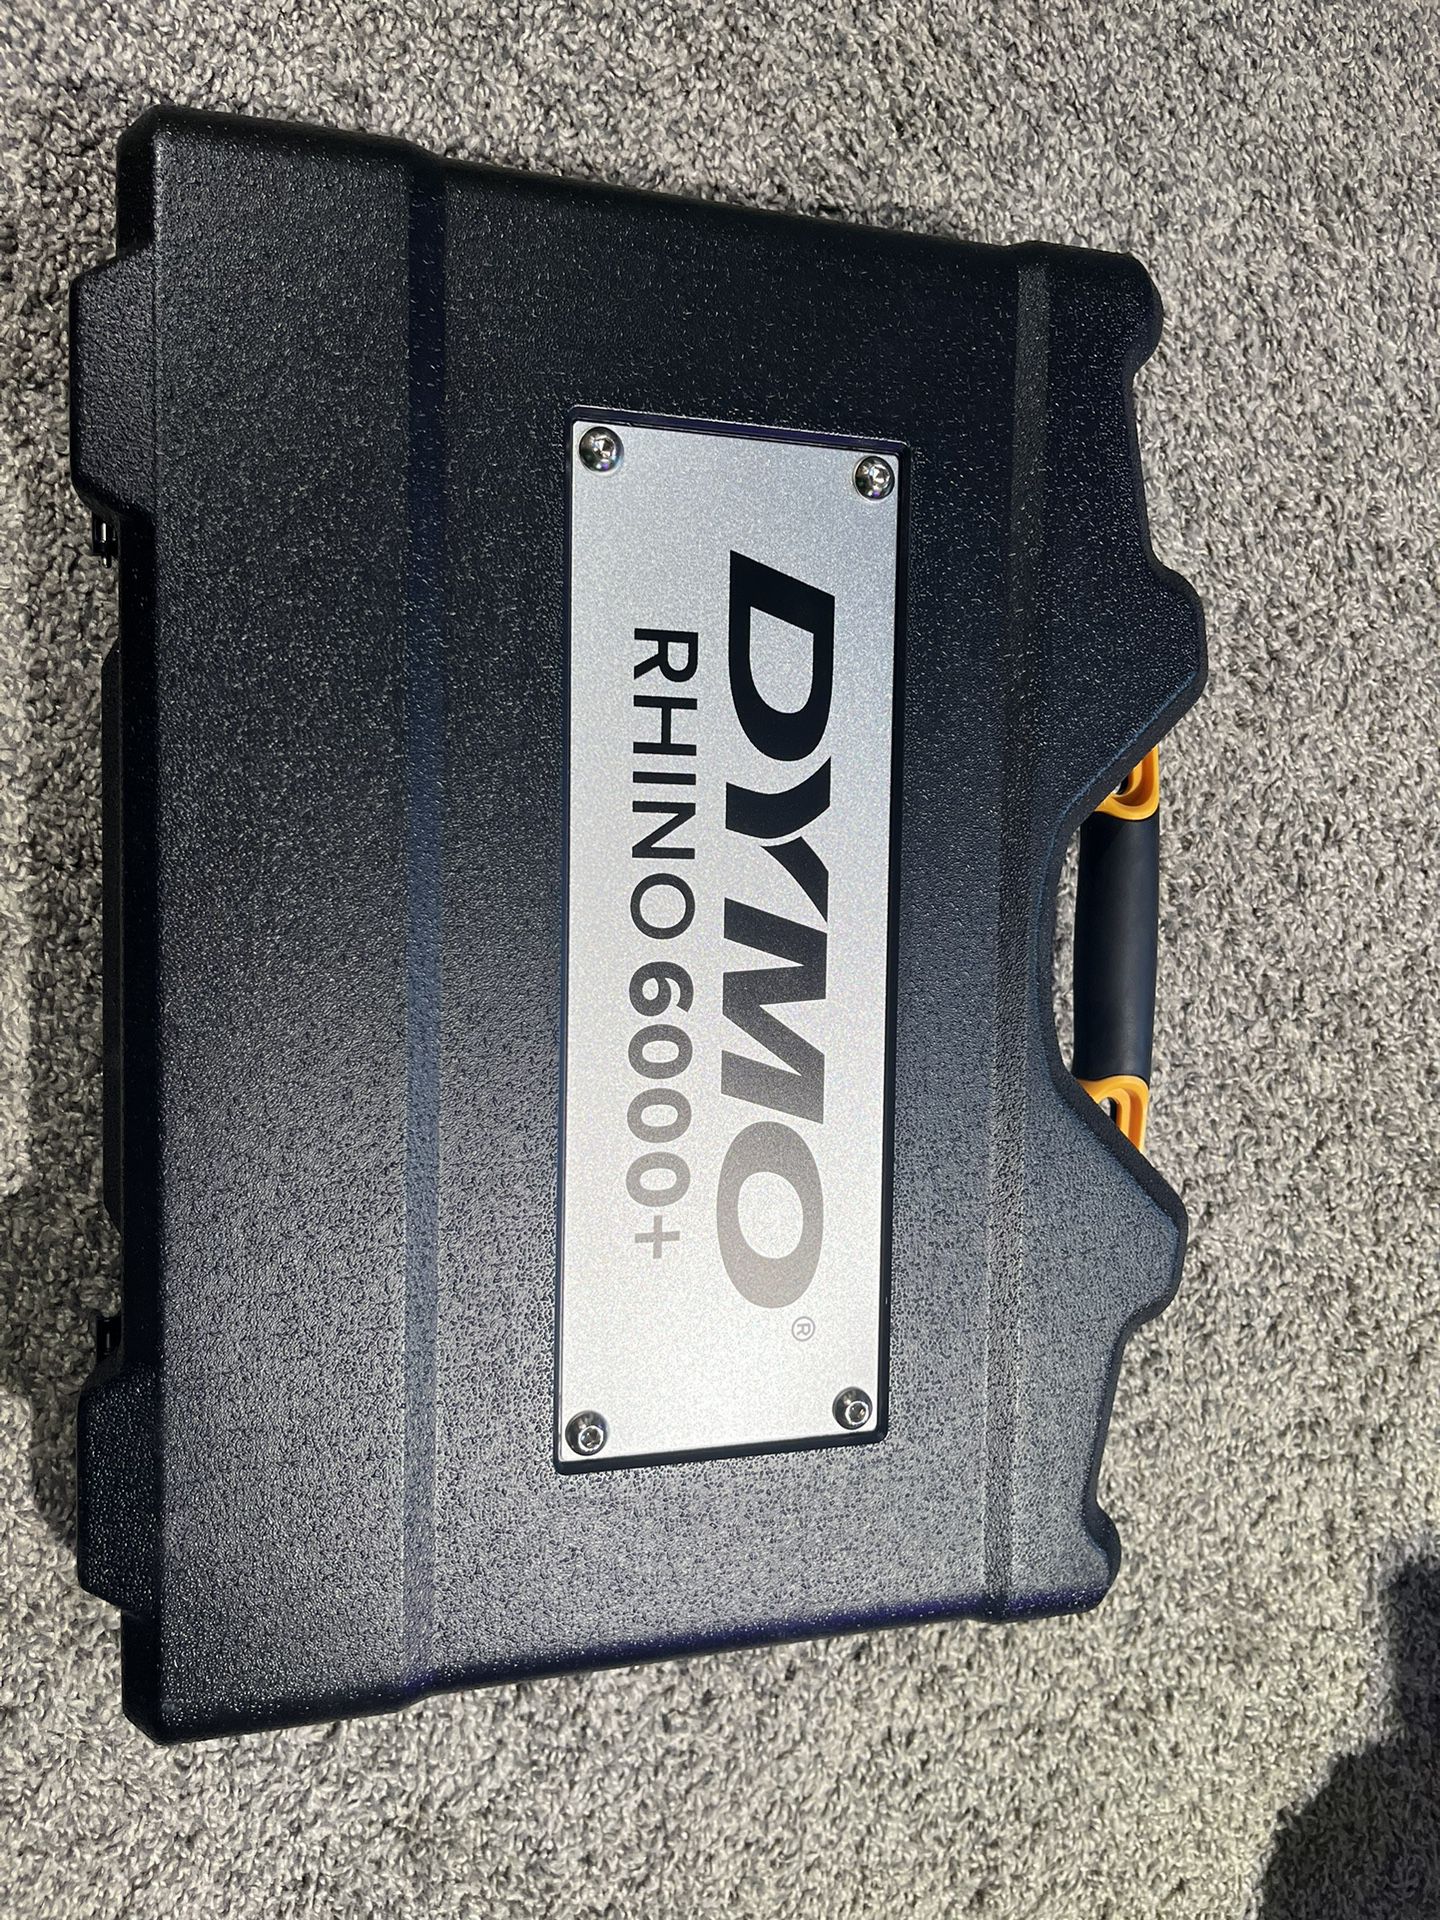 Dymo Rhino 6000 Label Printer